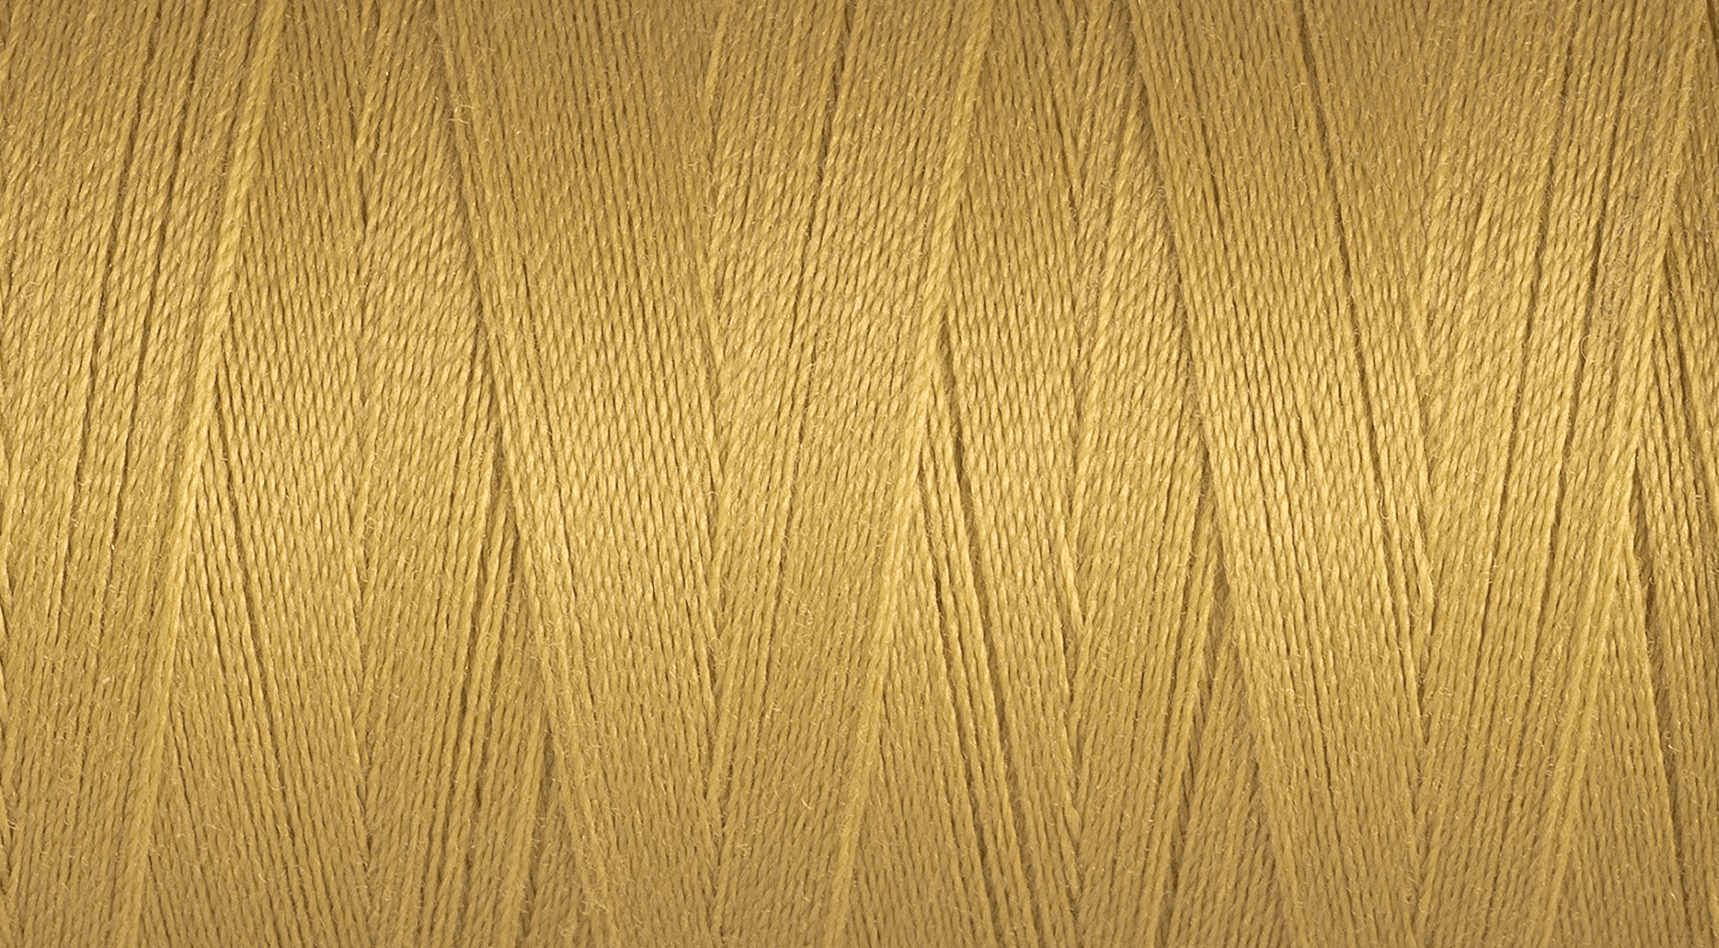 Gutermann Overlock Yarn - Bulky-Lock 80 : 1000 M Ochre (41968)-Thread-Jelly Fabrics